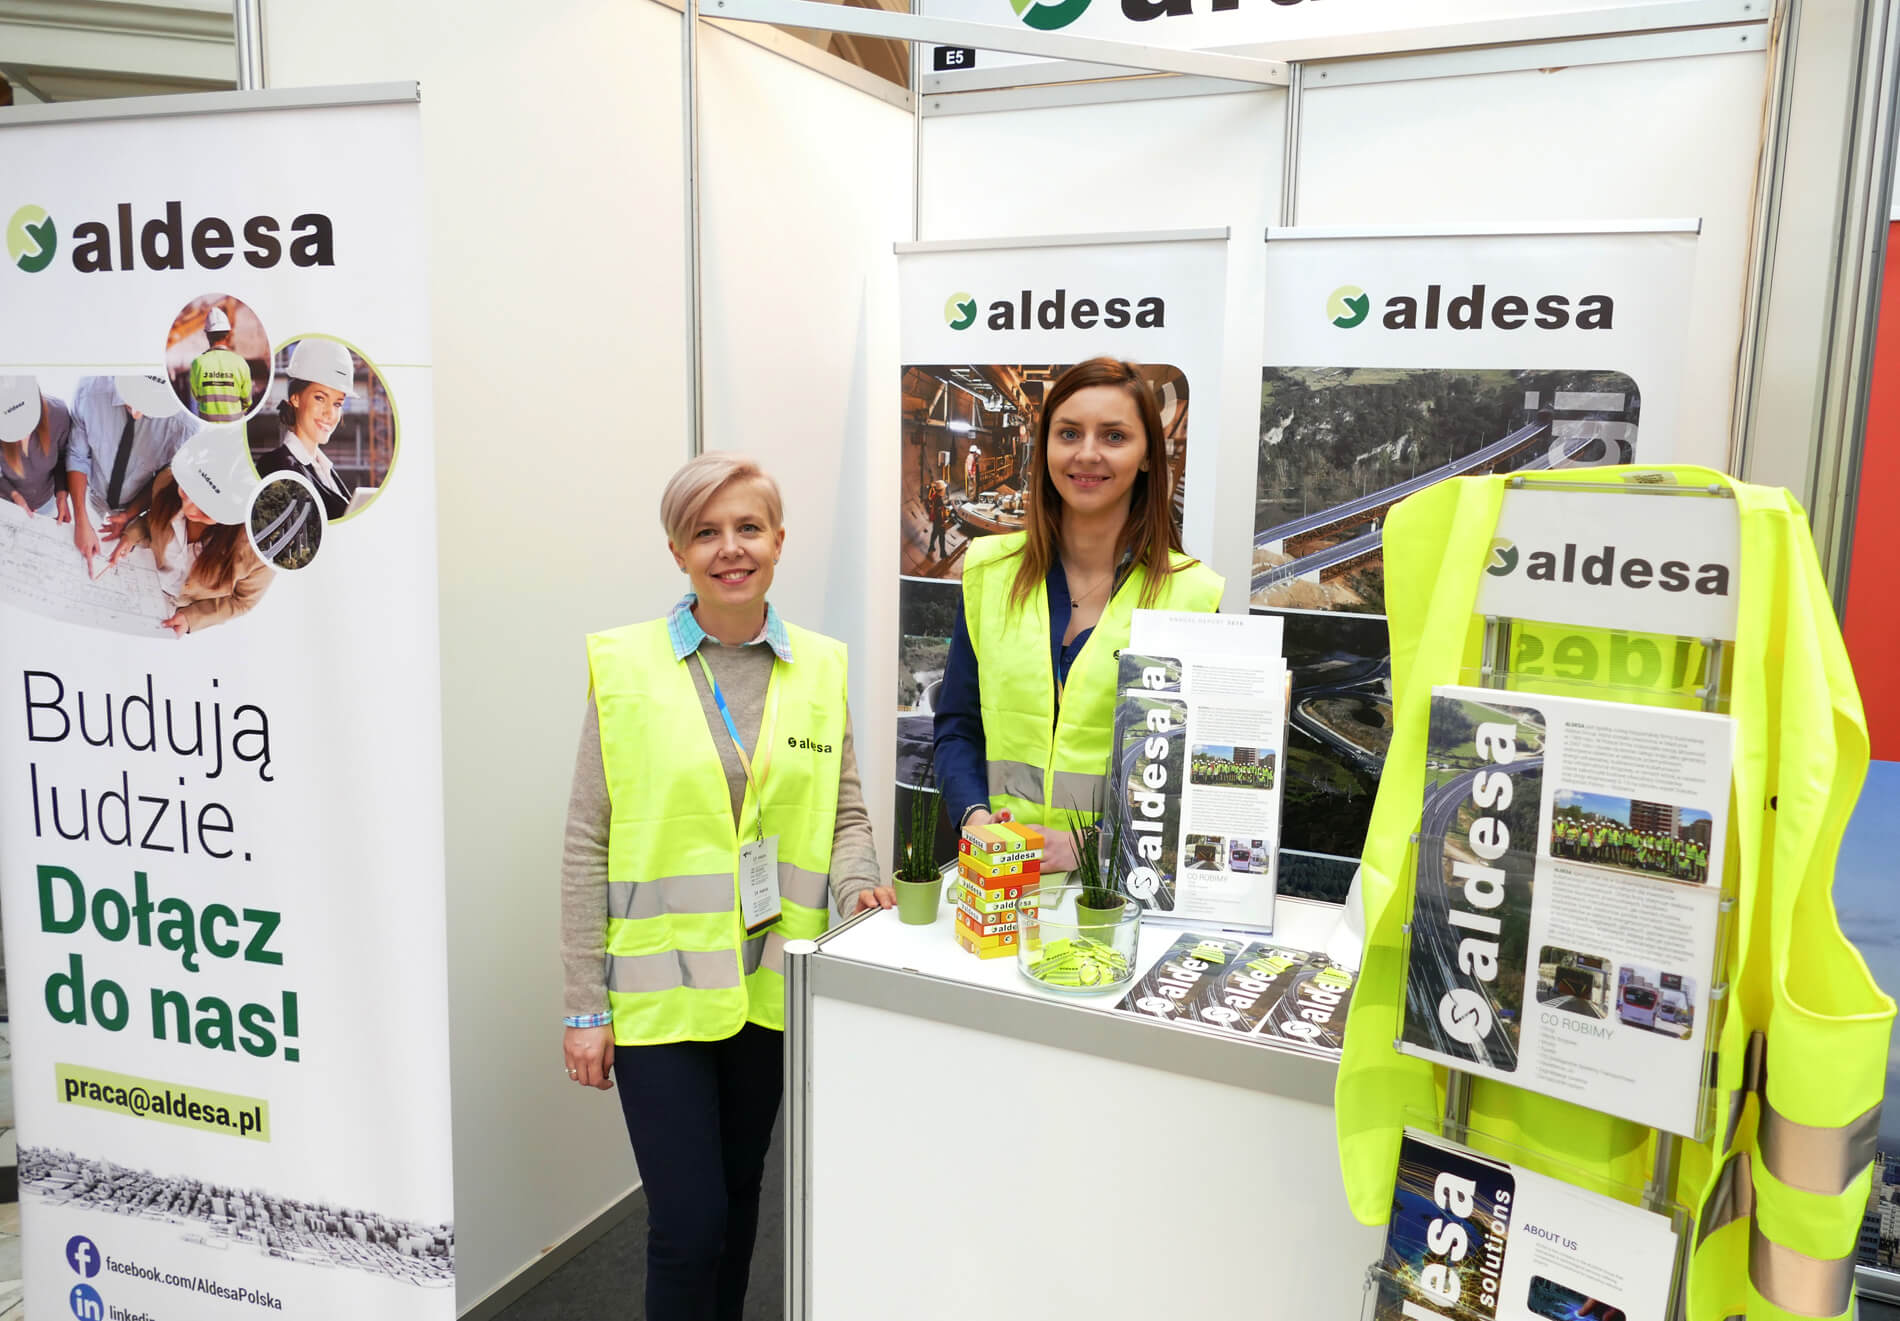 Aldesa - Aldesa Polska at Warsaw University of Technology Job Fair